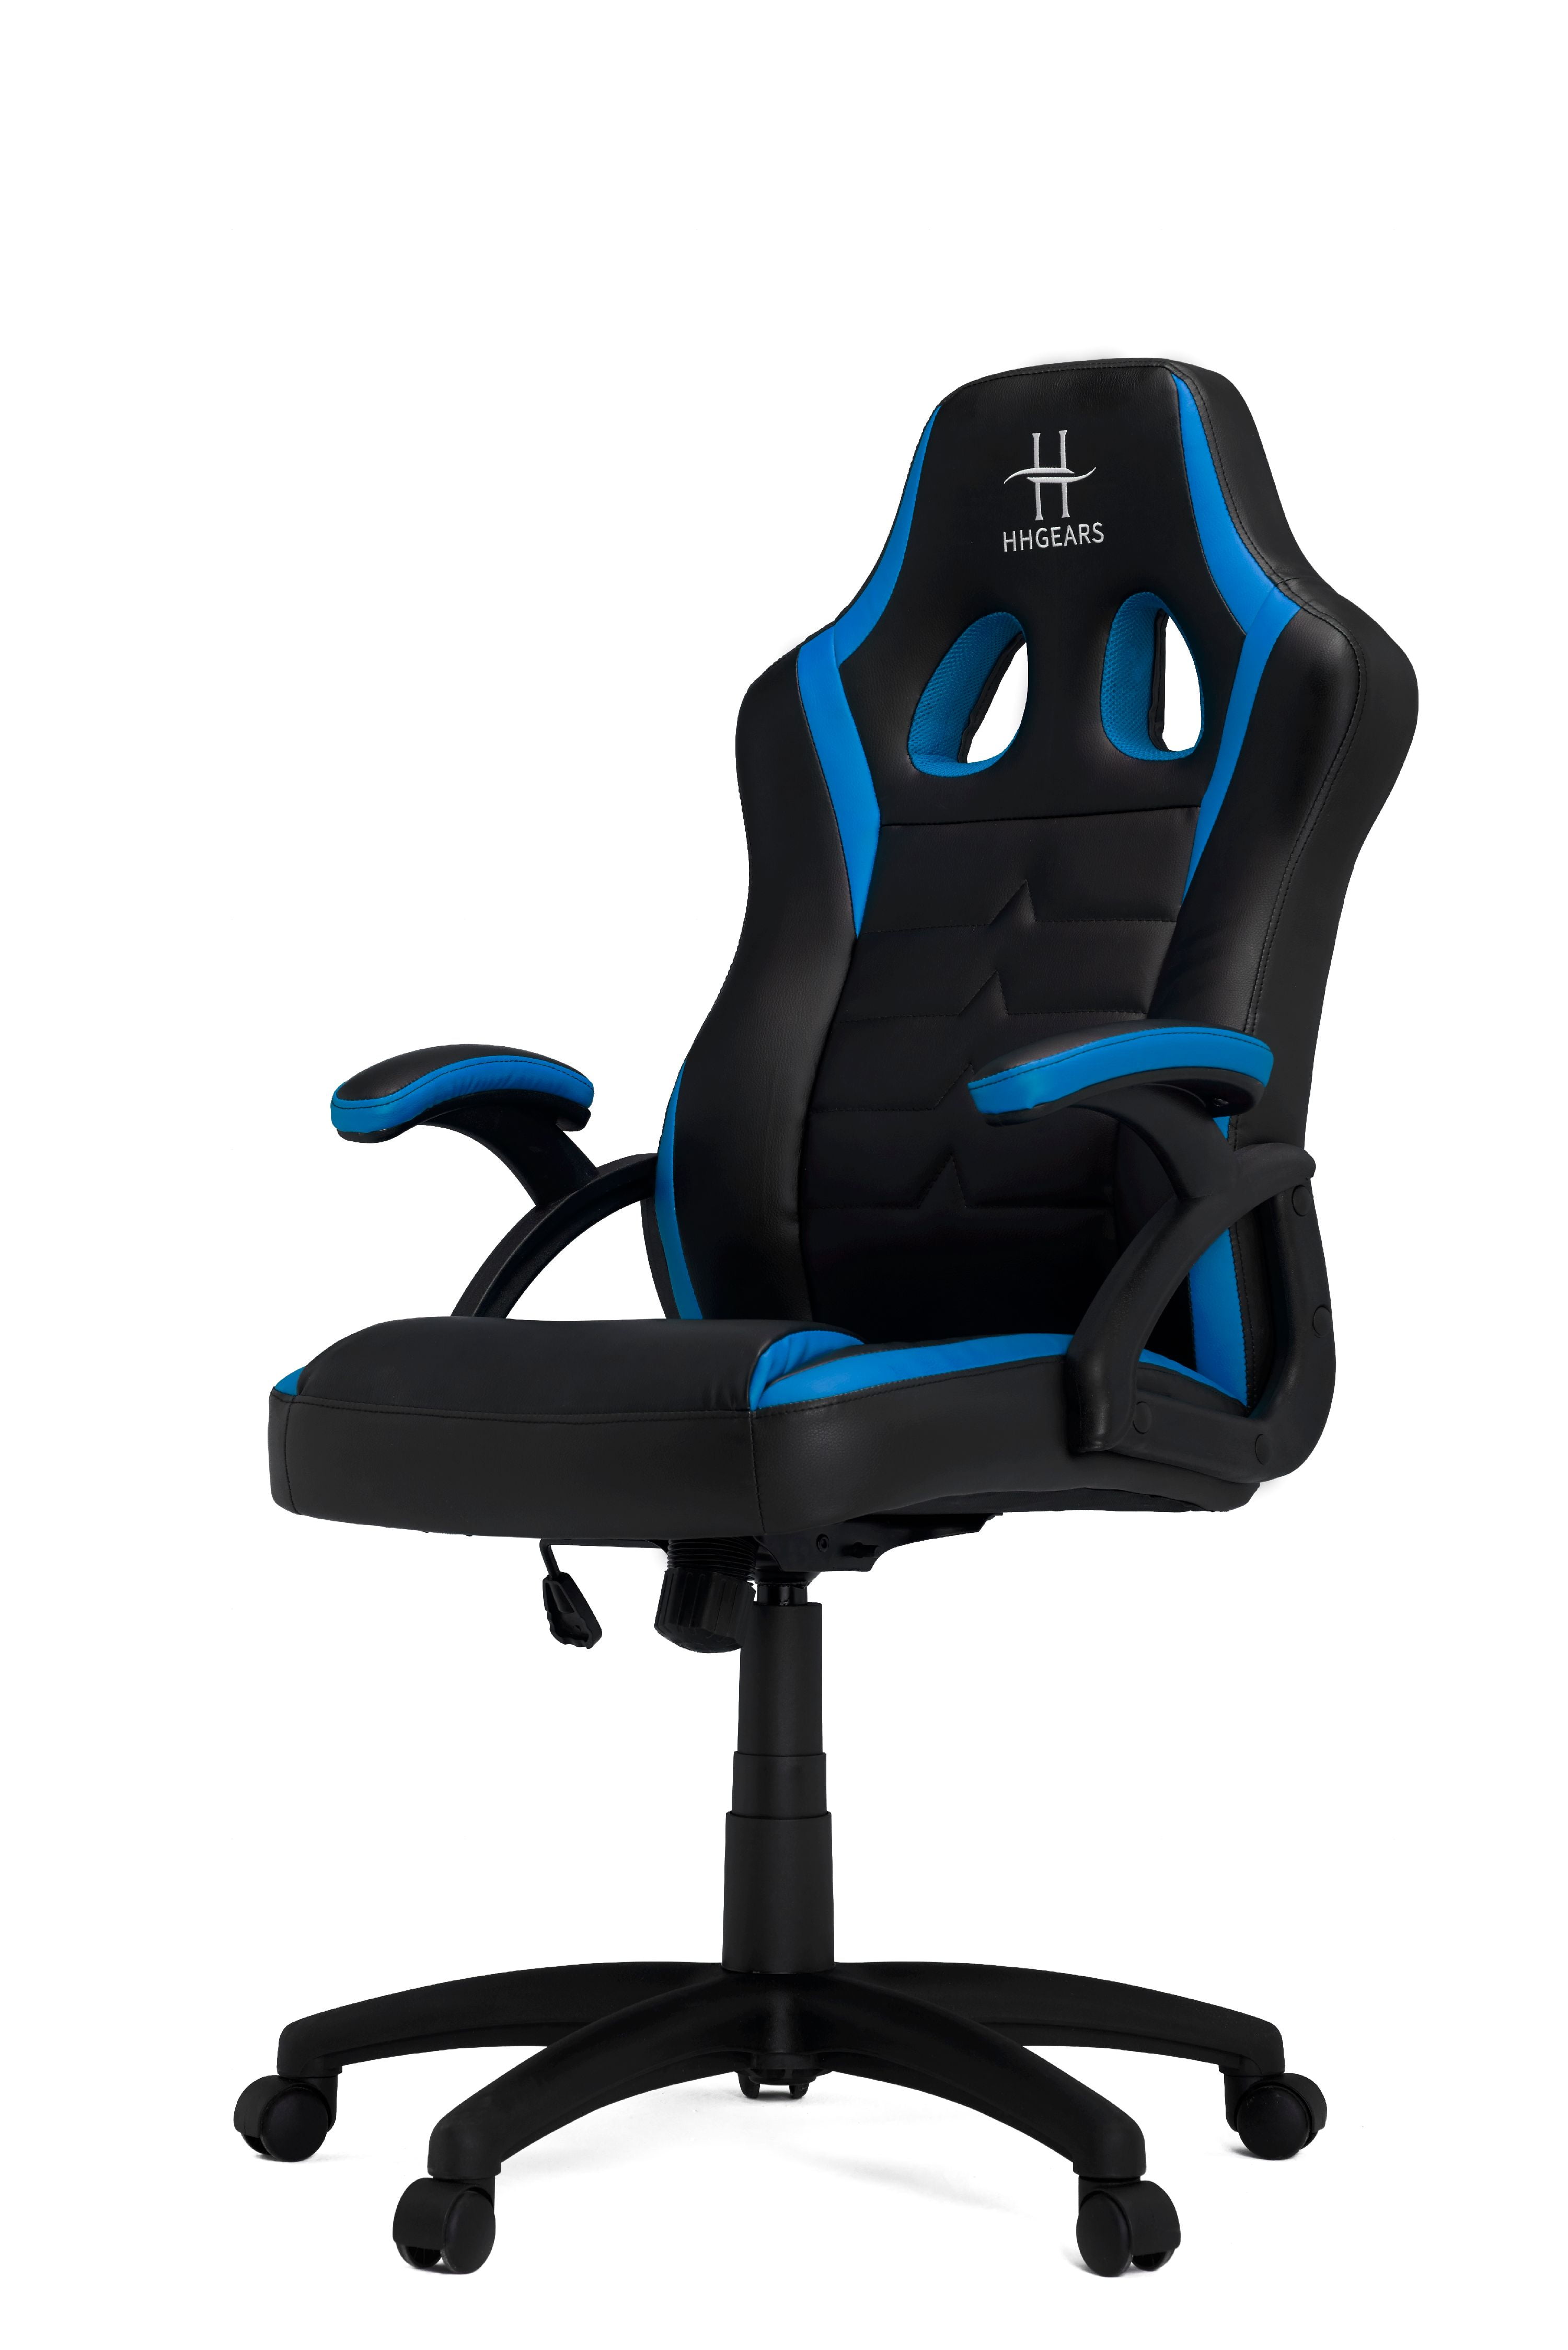 HHGears SM115 Gaming Chair Black and Blue